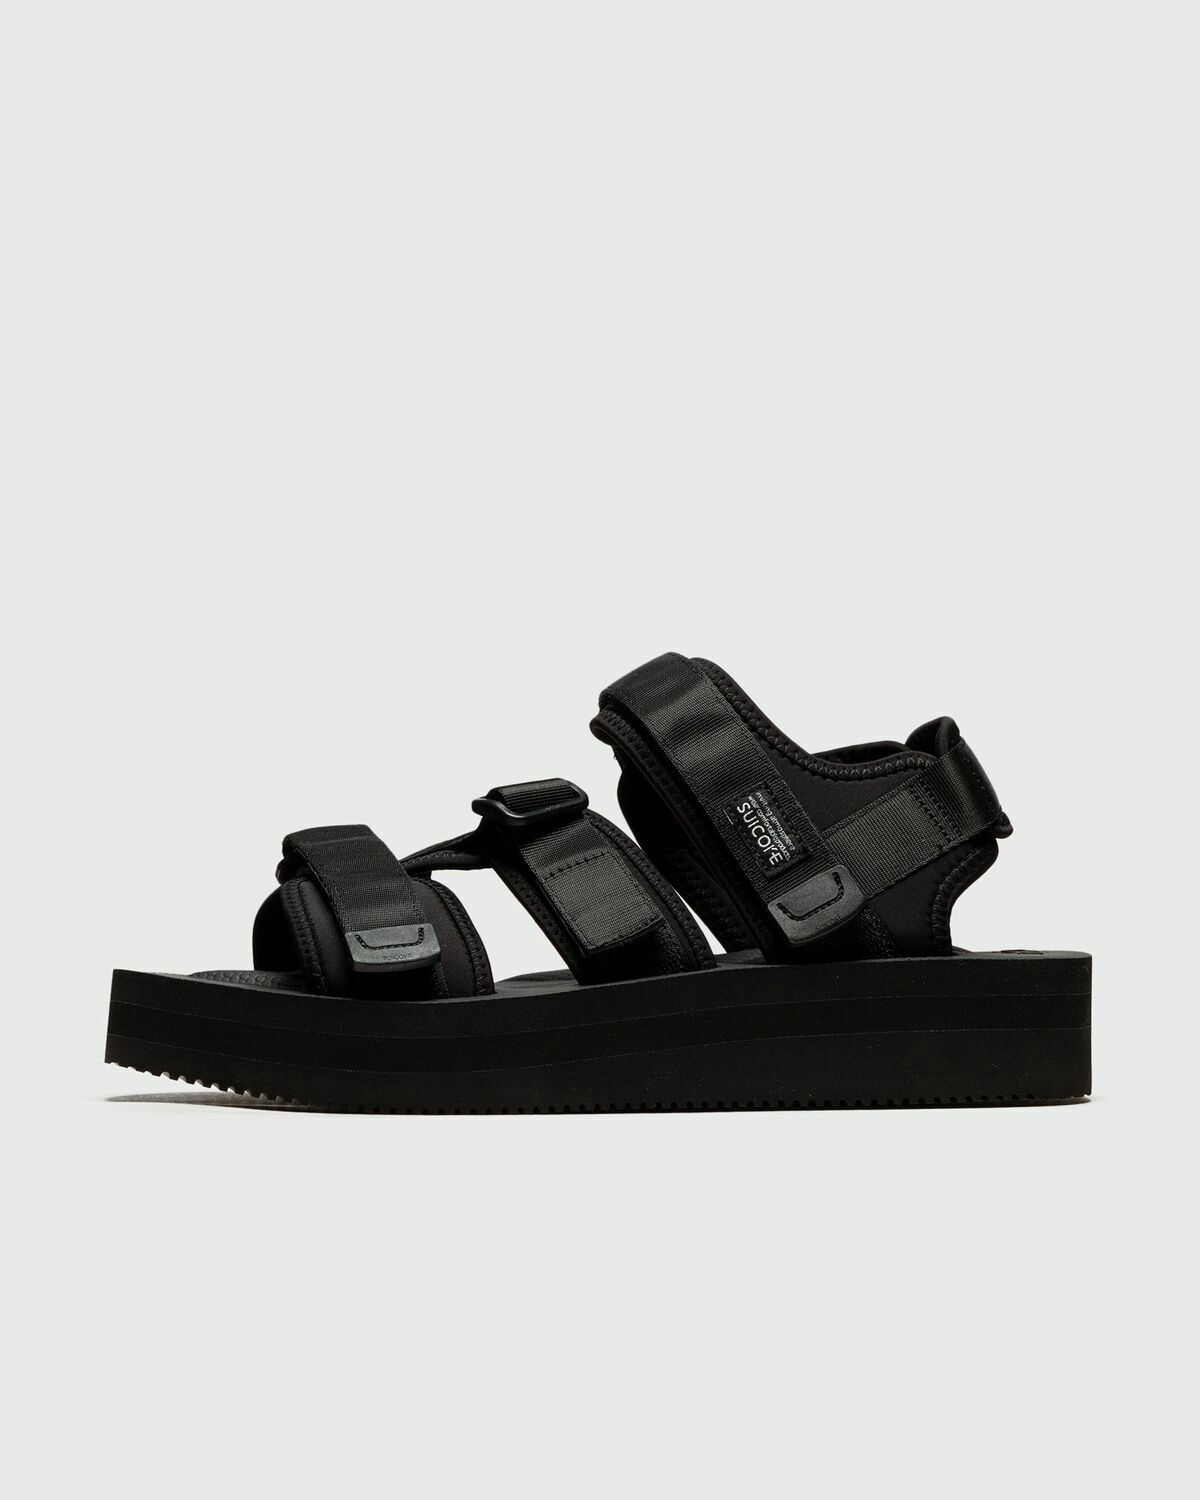 Suicoke Kisee Vpo Black - Mens - Sandals & Slides Suicoke